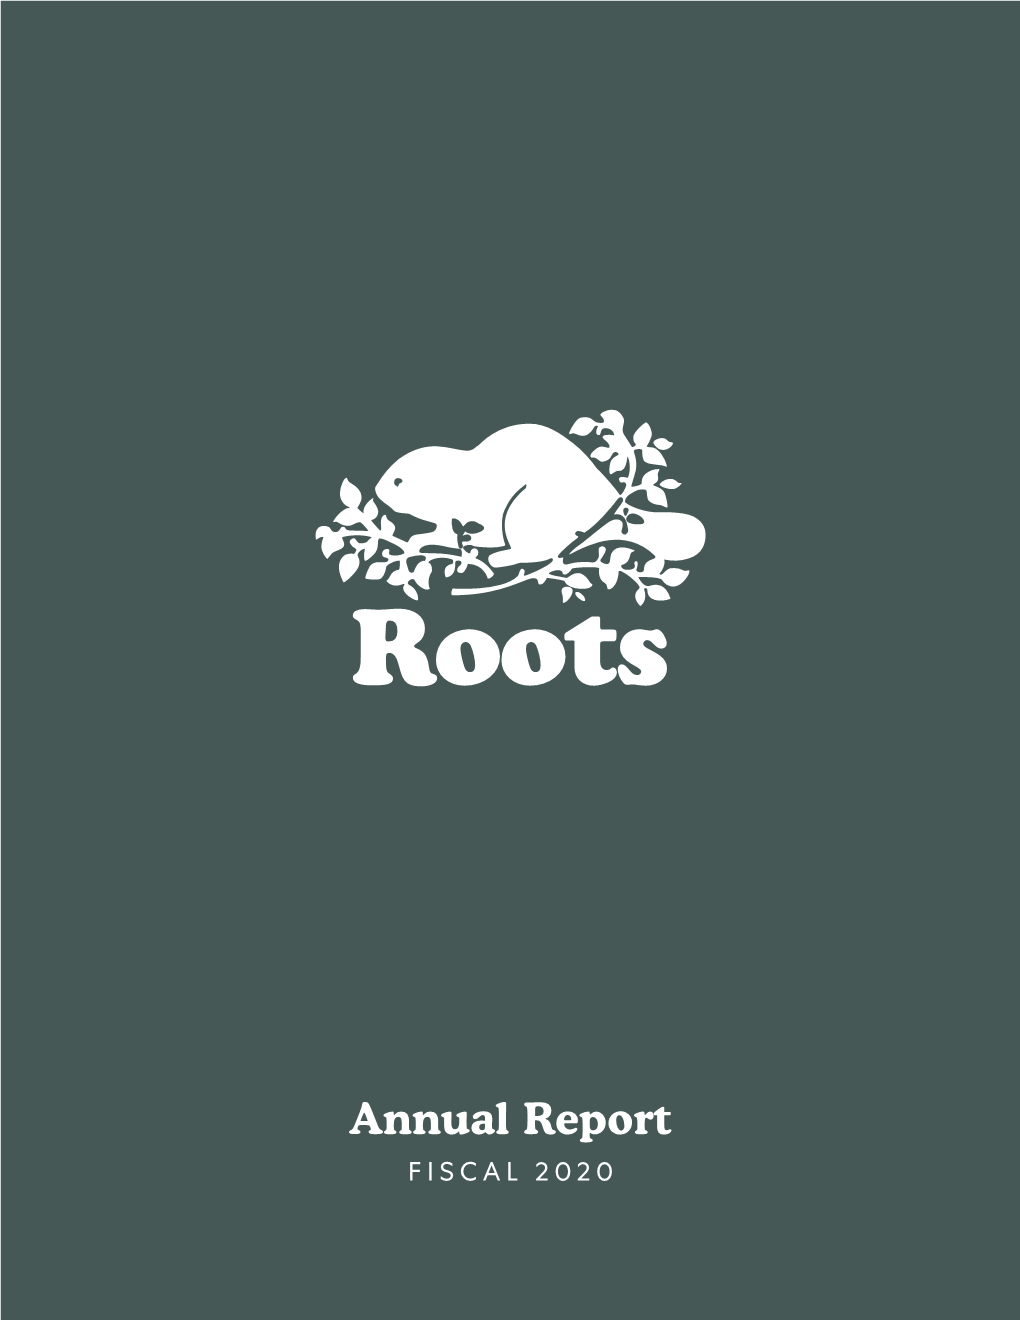 2020 Annual Report”